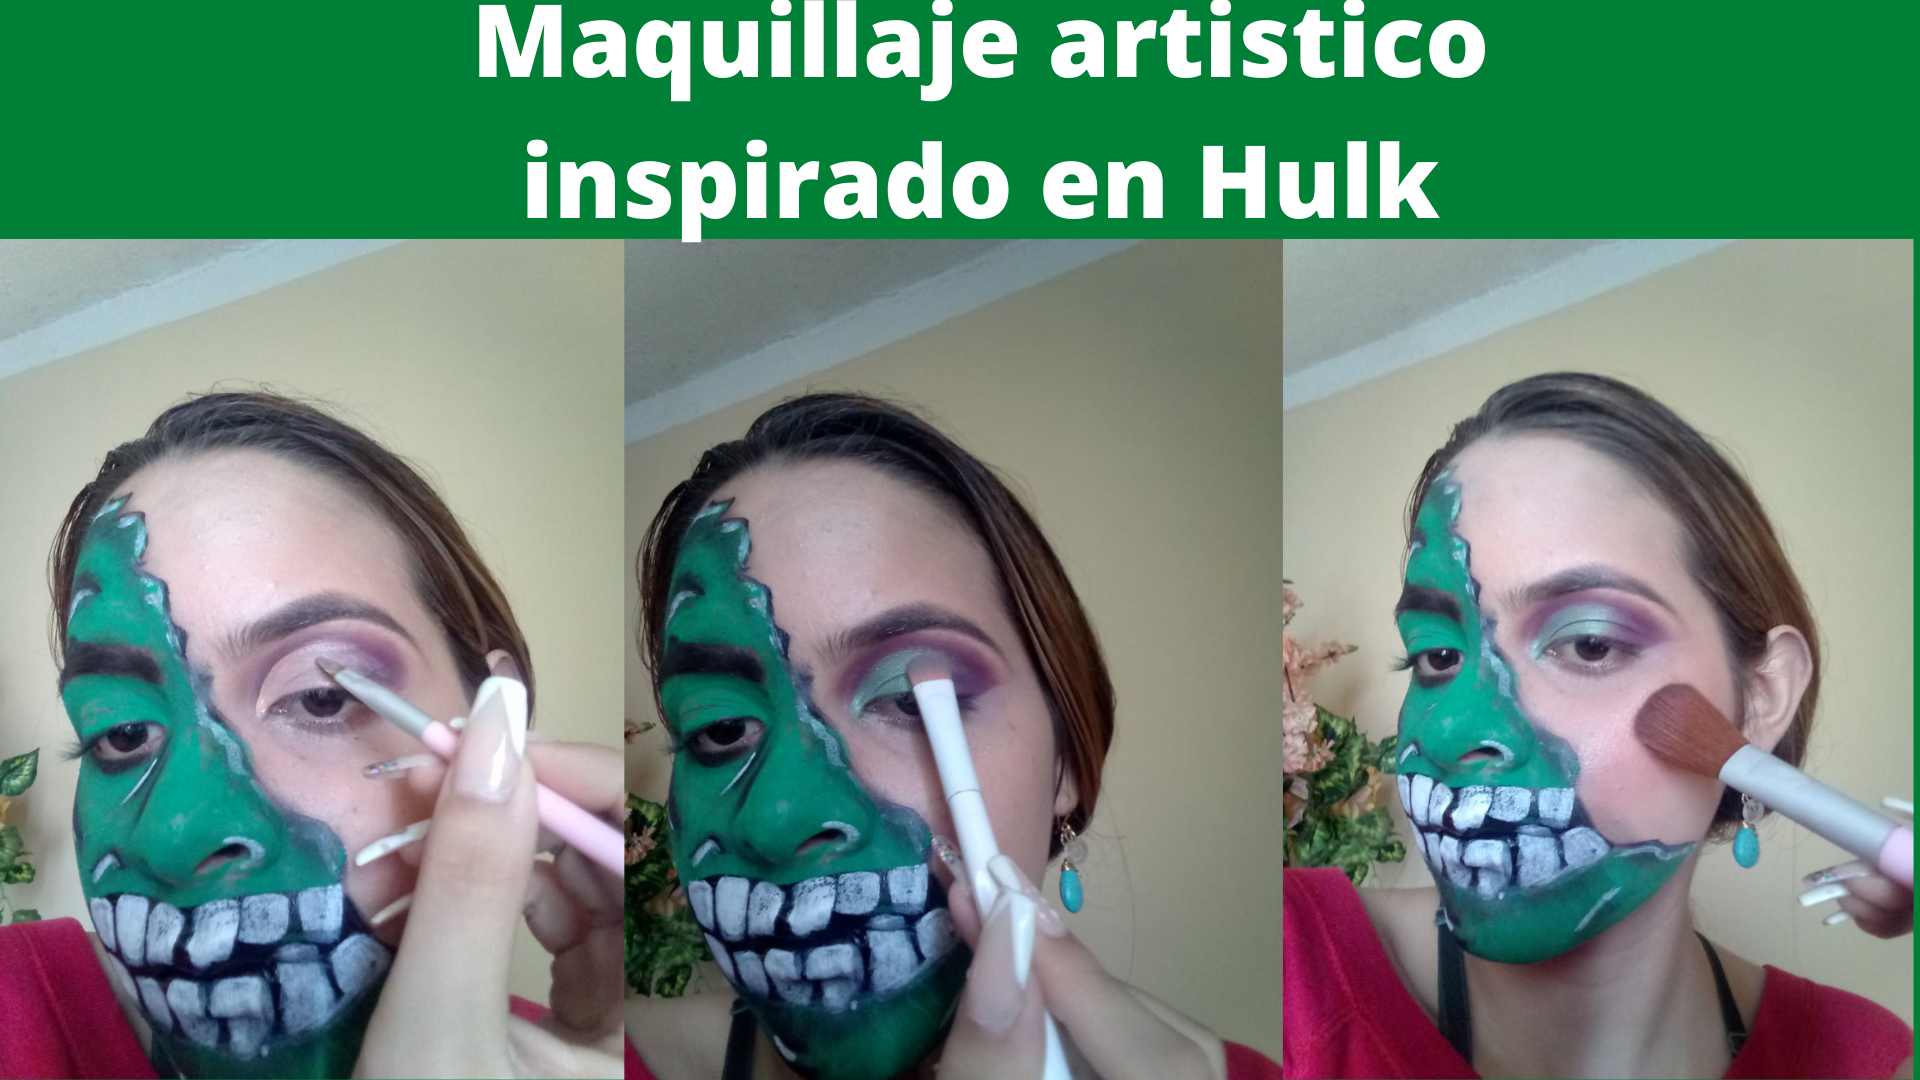 Maquillaje artistico inspirado en Hulk (3).png